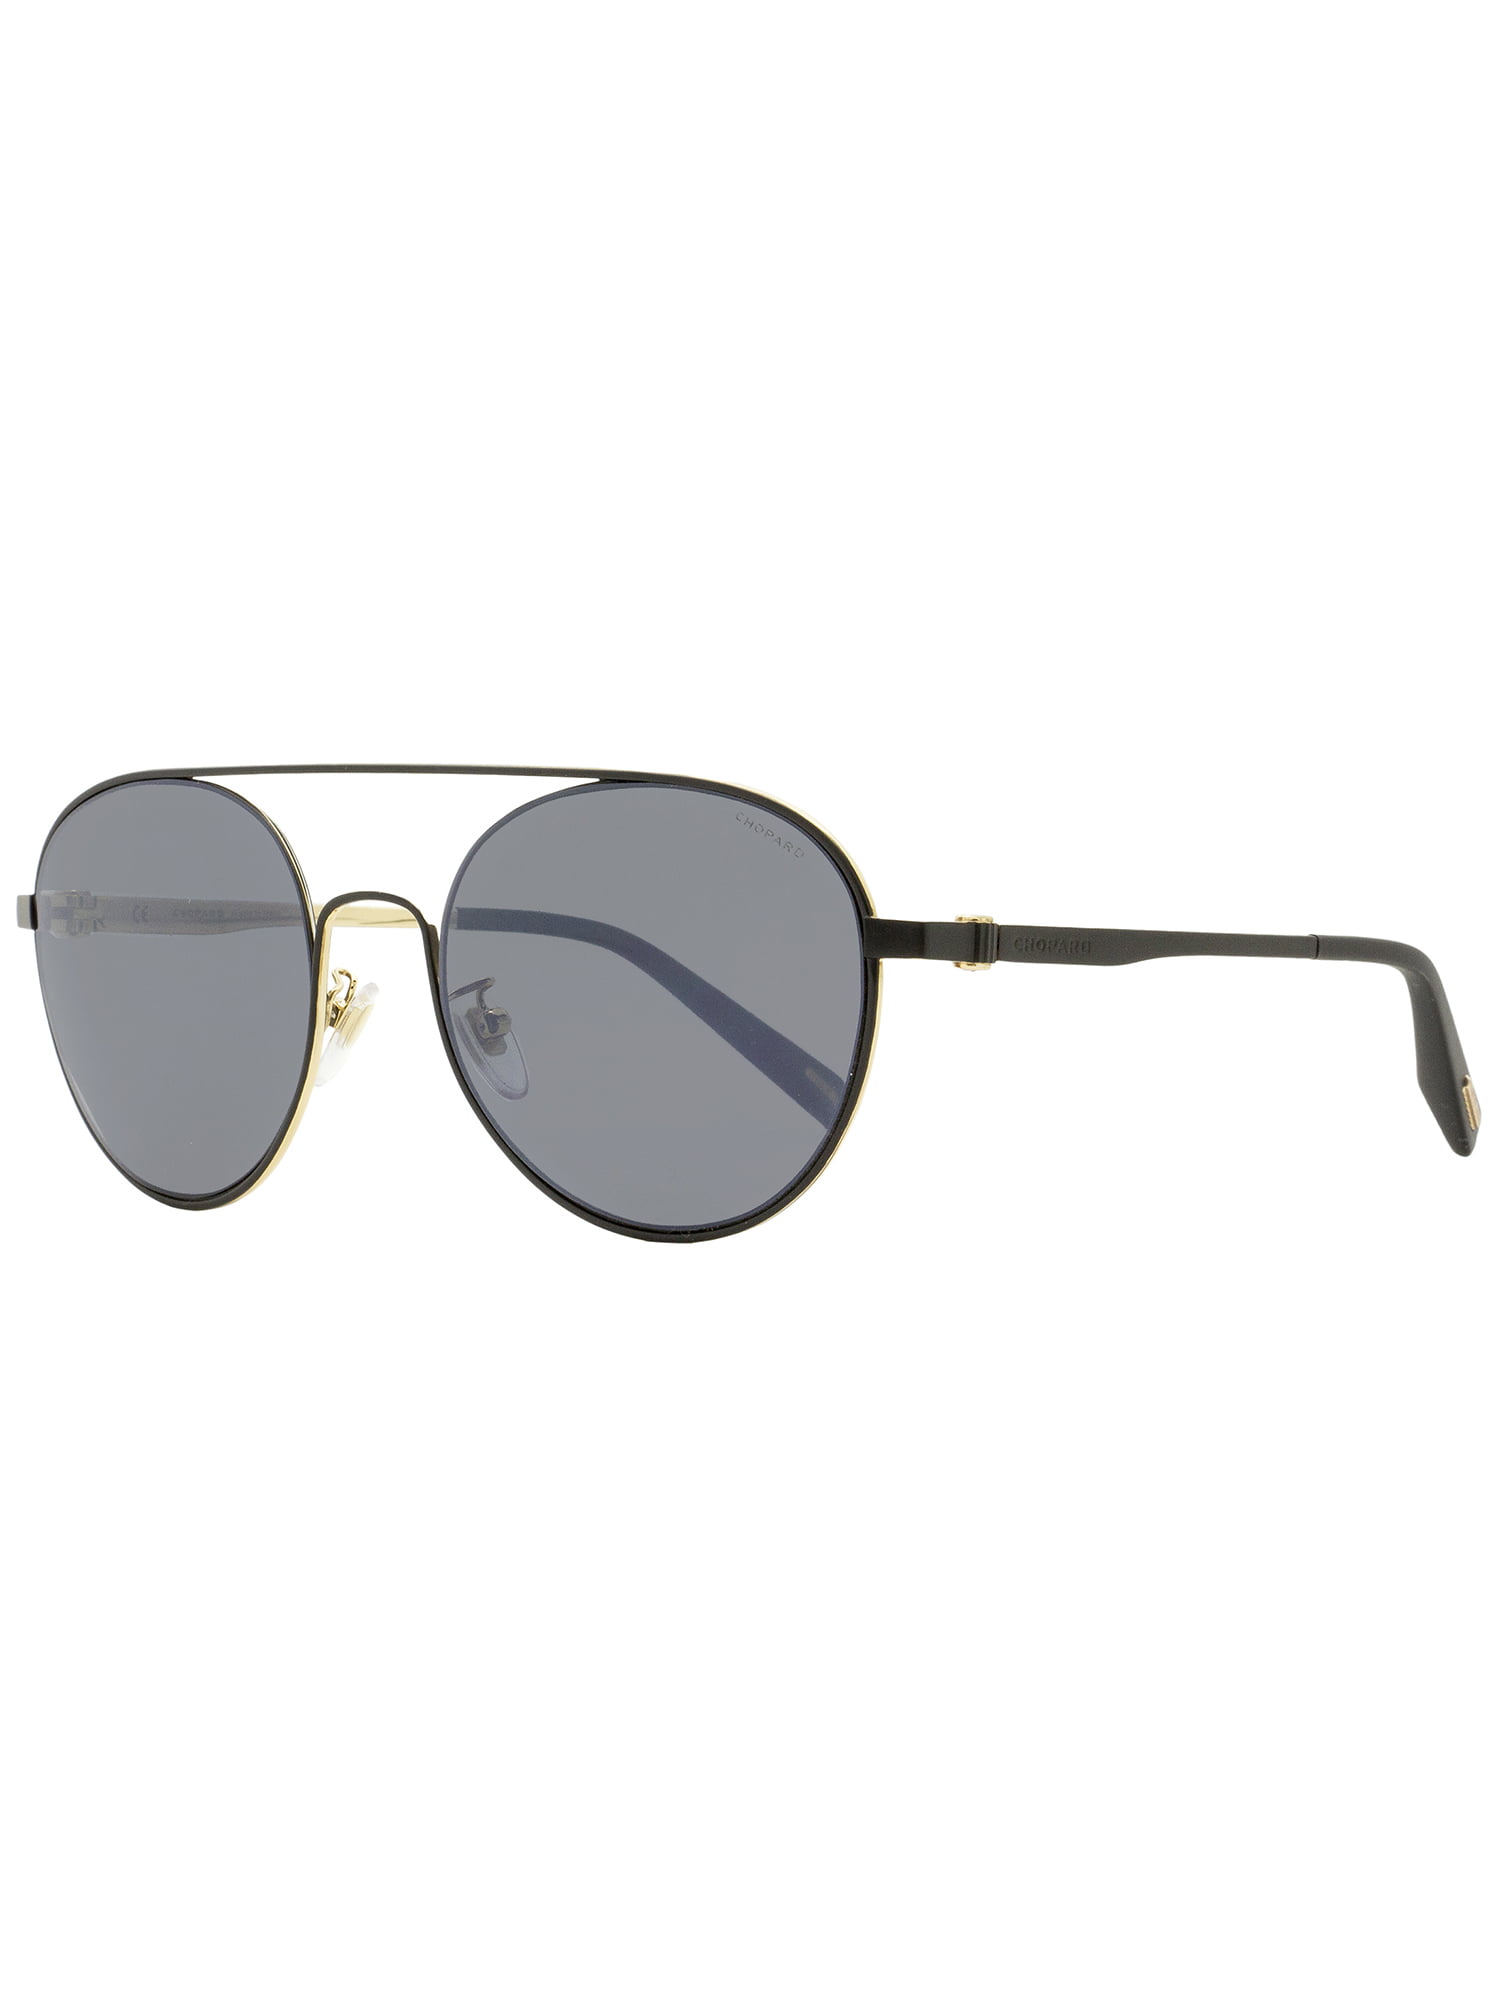 Chopard Butterfly Sunglasses SCHC19S 8FEL Gold/Black 65mm C19